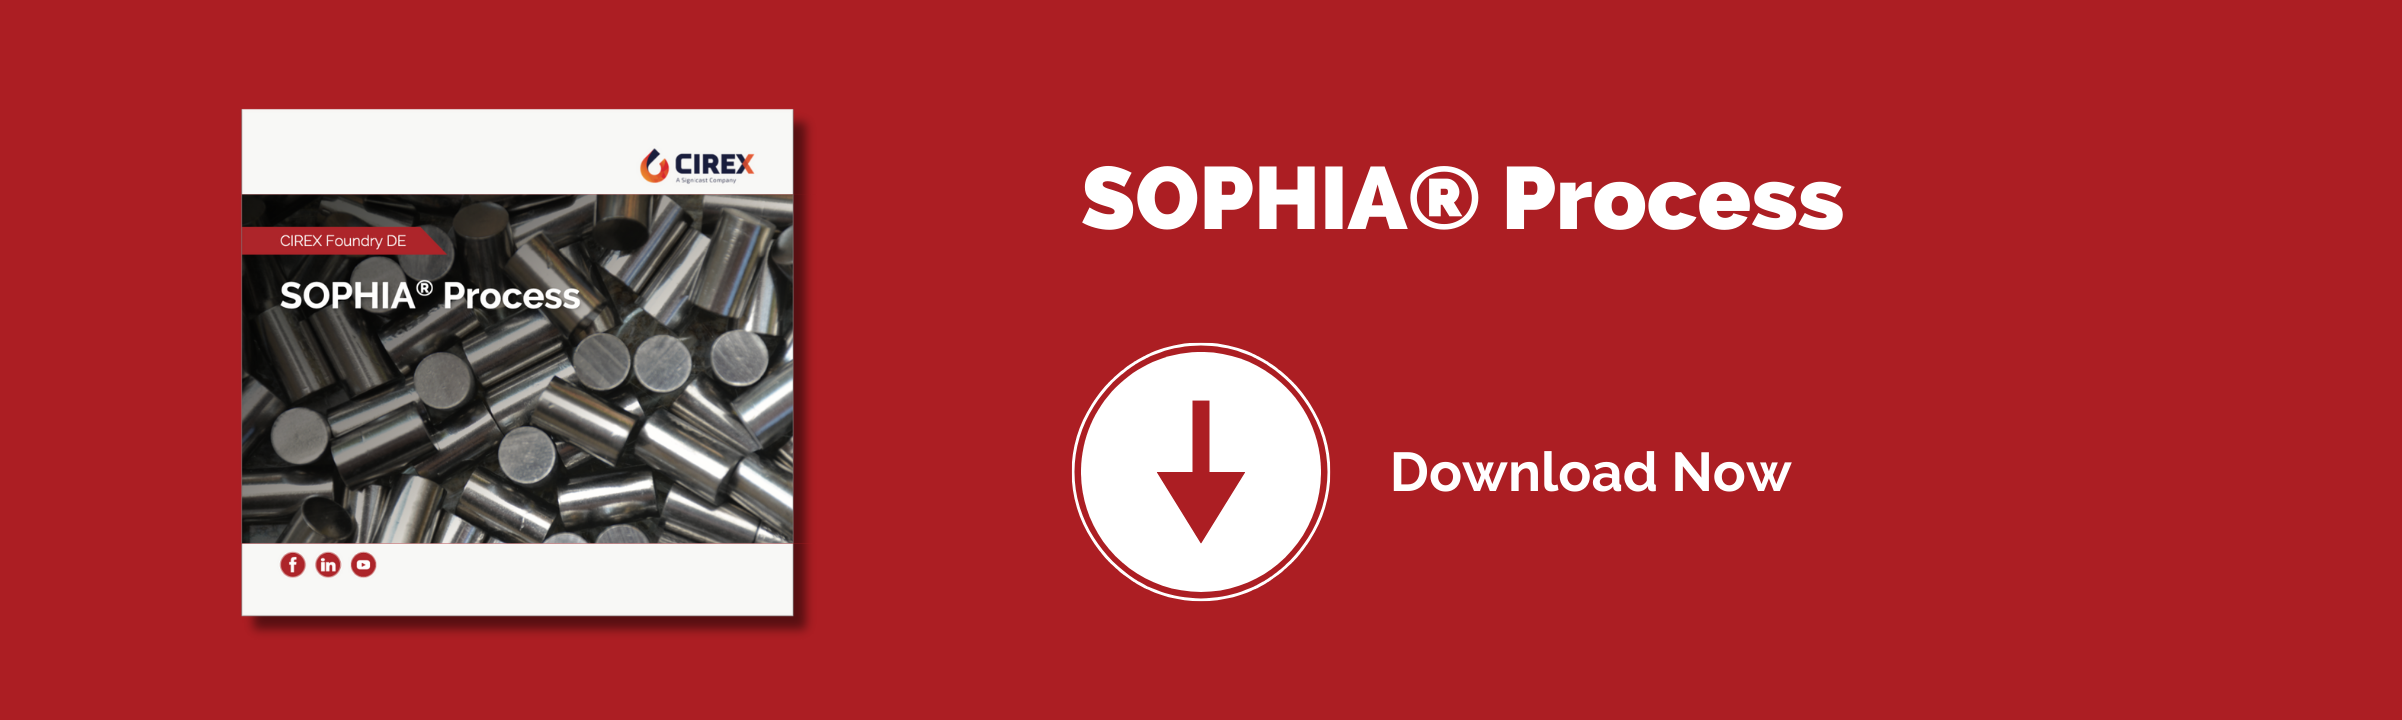 SOPHIA Process Whitepaper download banner